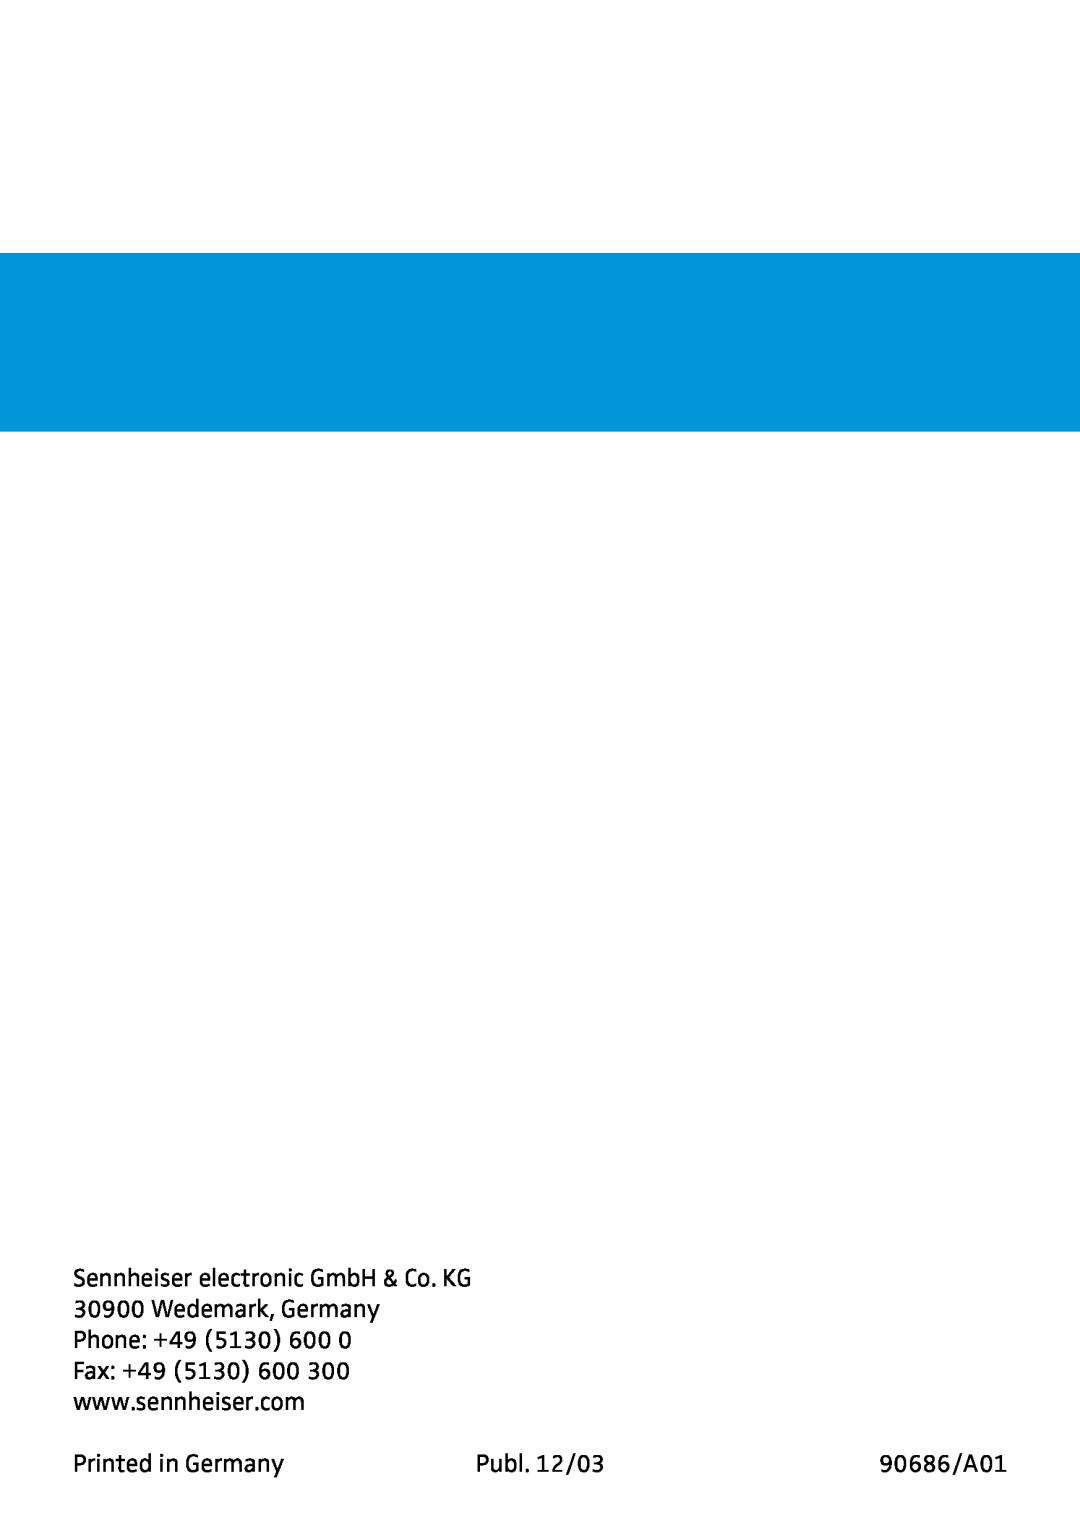 Sennheiser ASP 2 manual Publ. 12/03, 90686/A01 